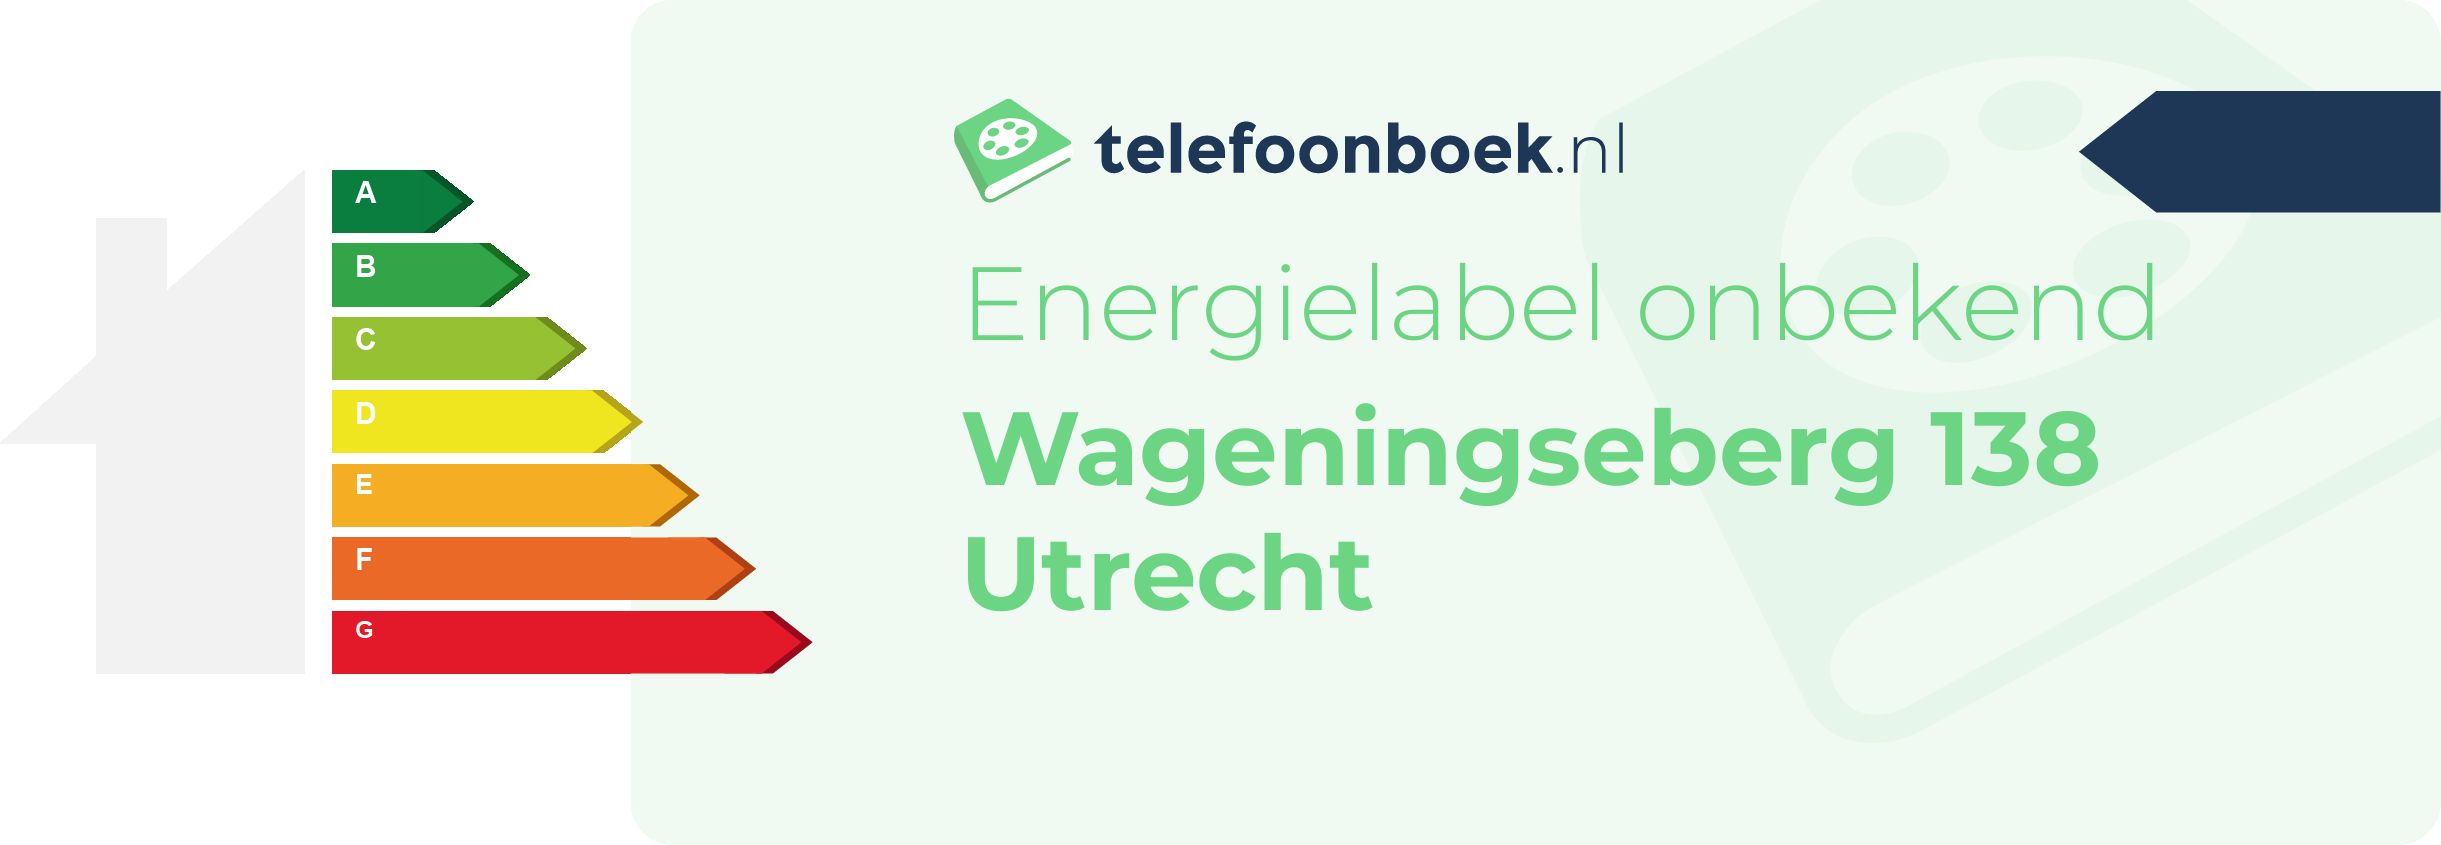 Energielabel Wageningseberg 138 Utrecht